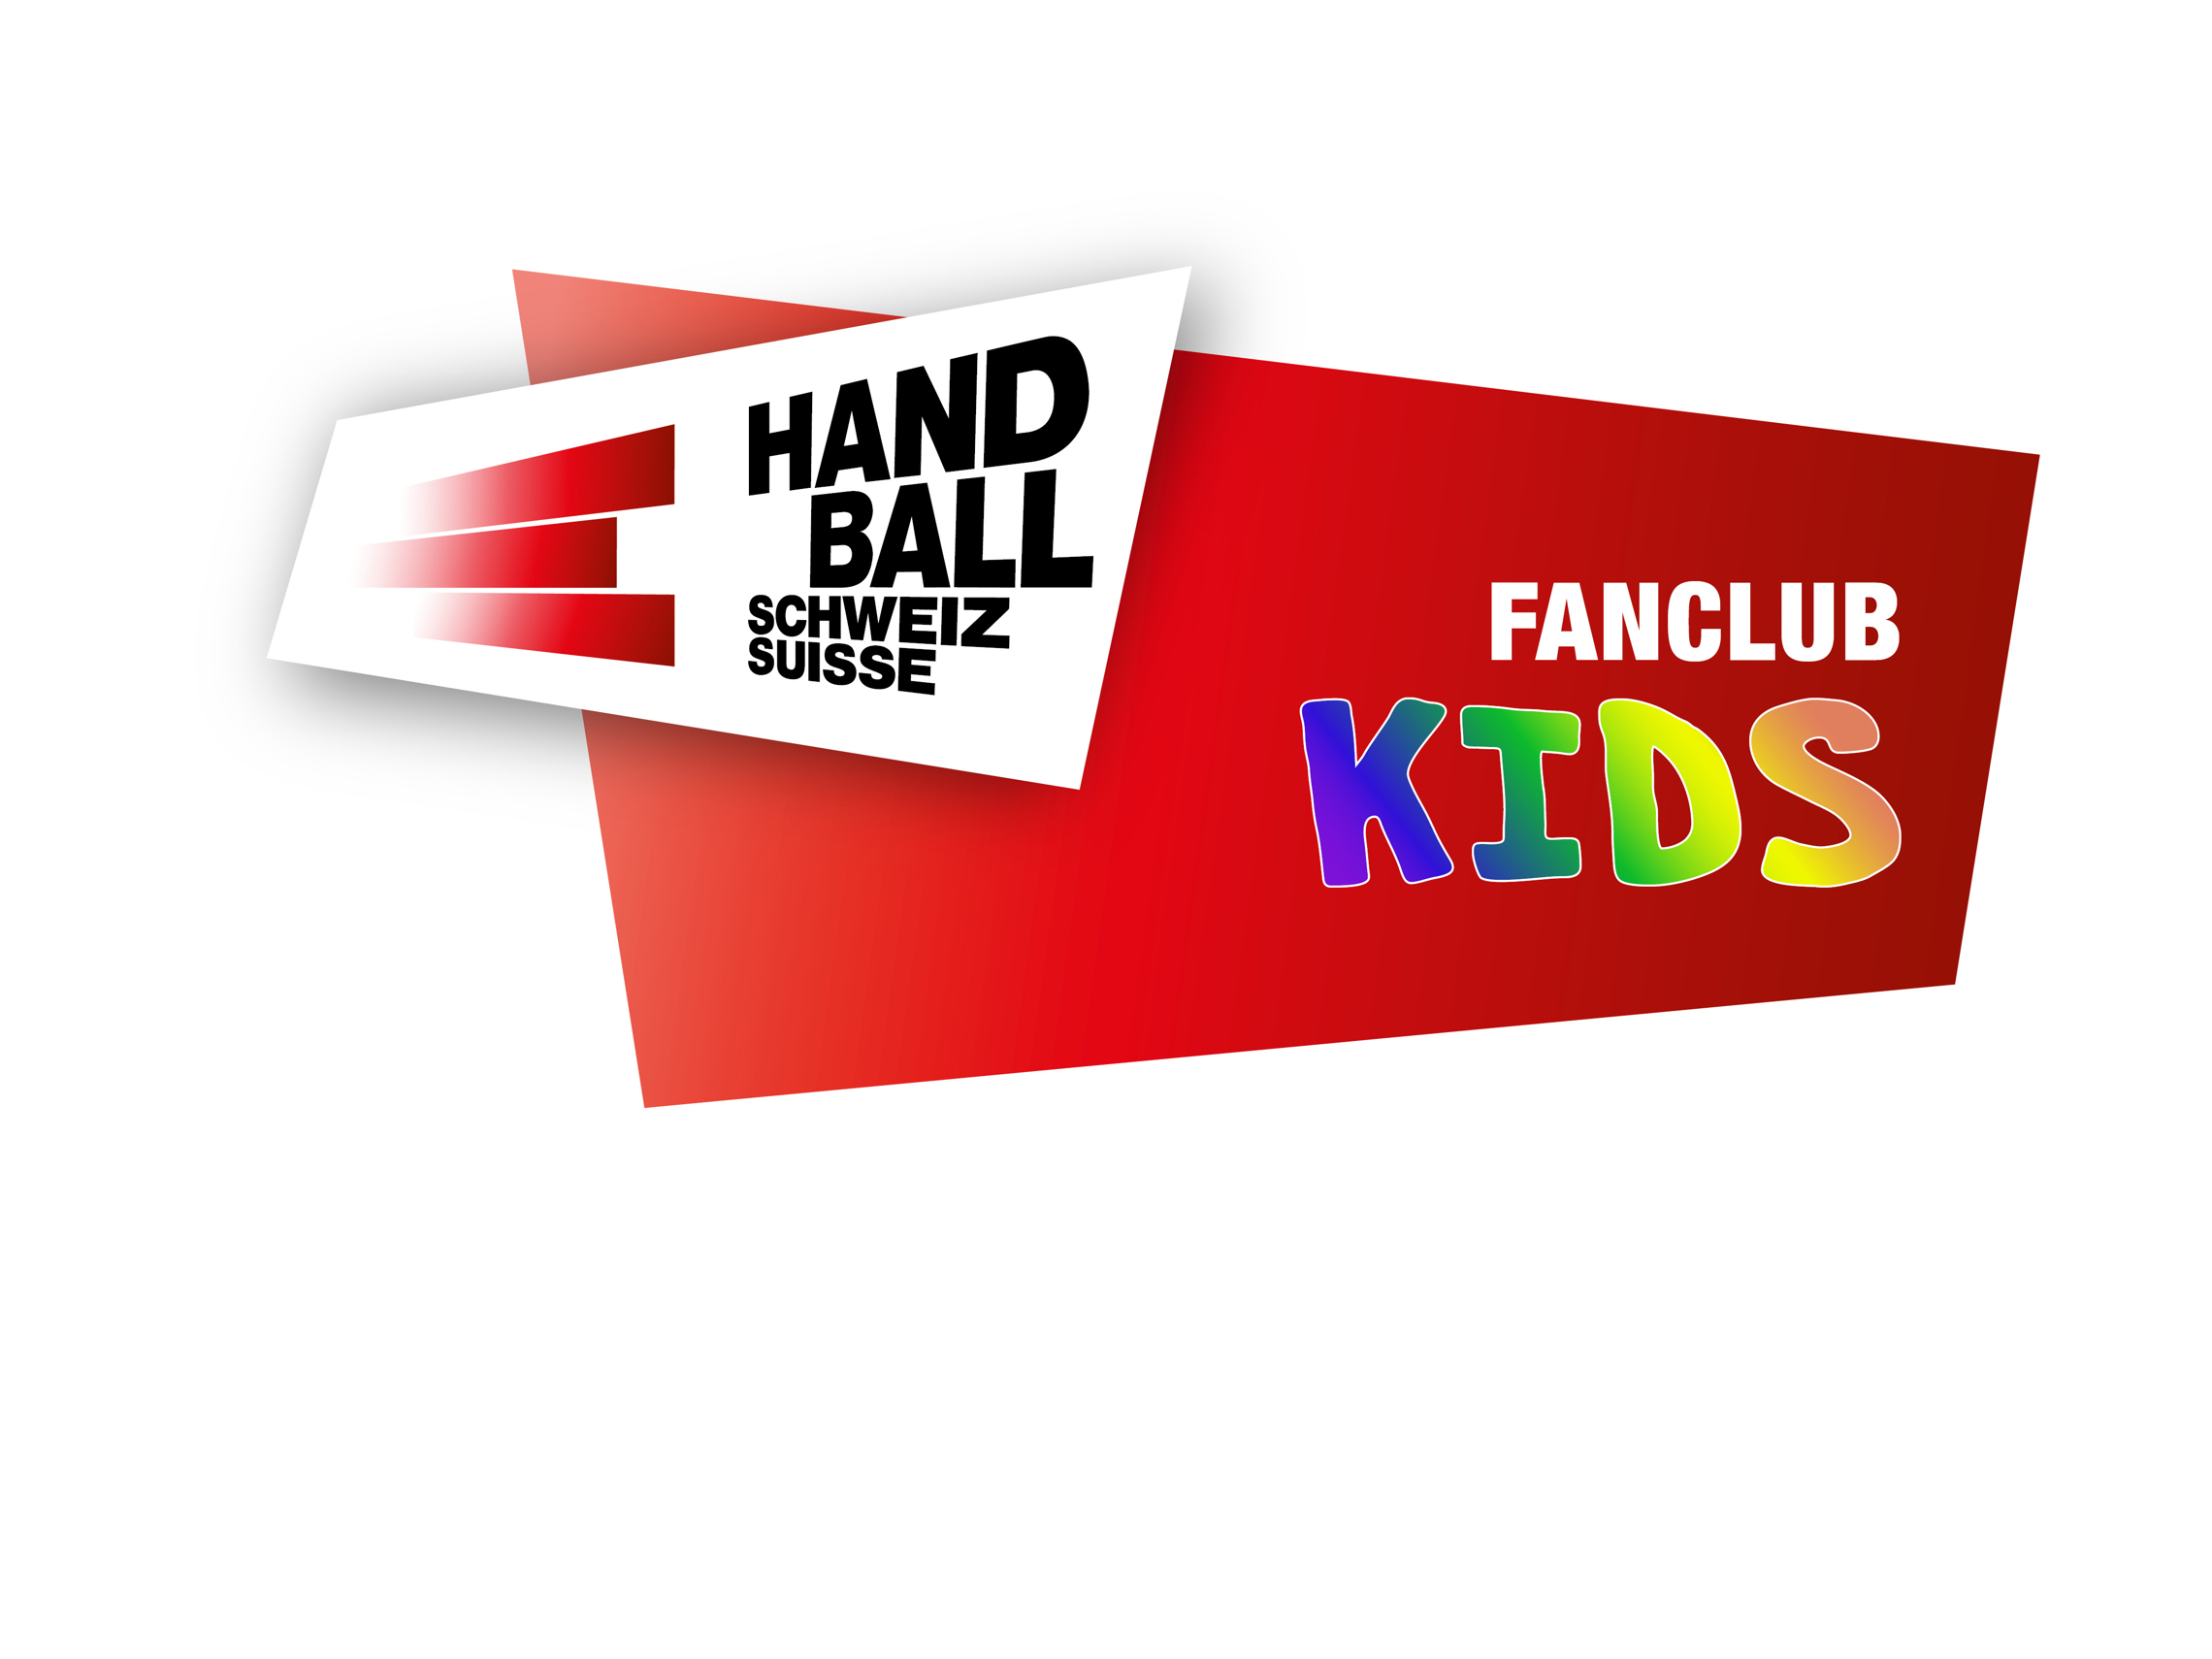 Fanclub Kids